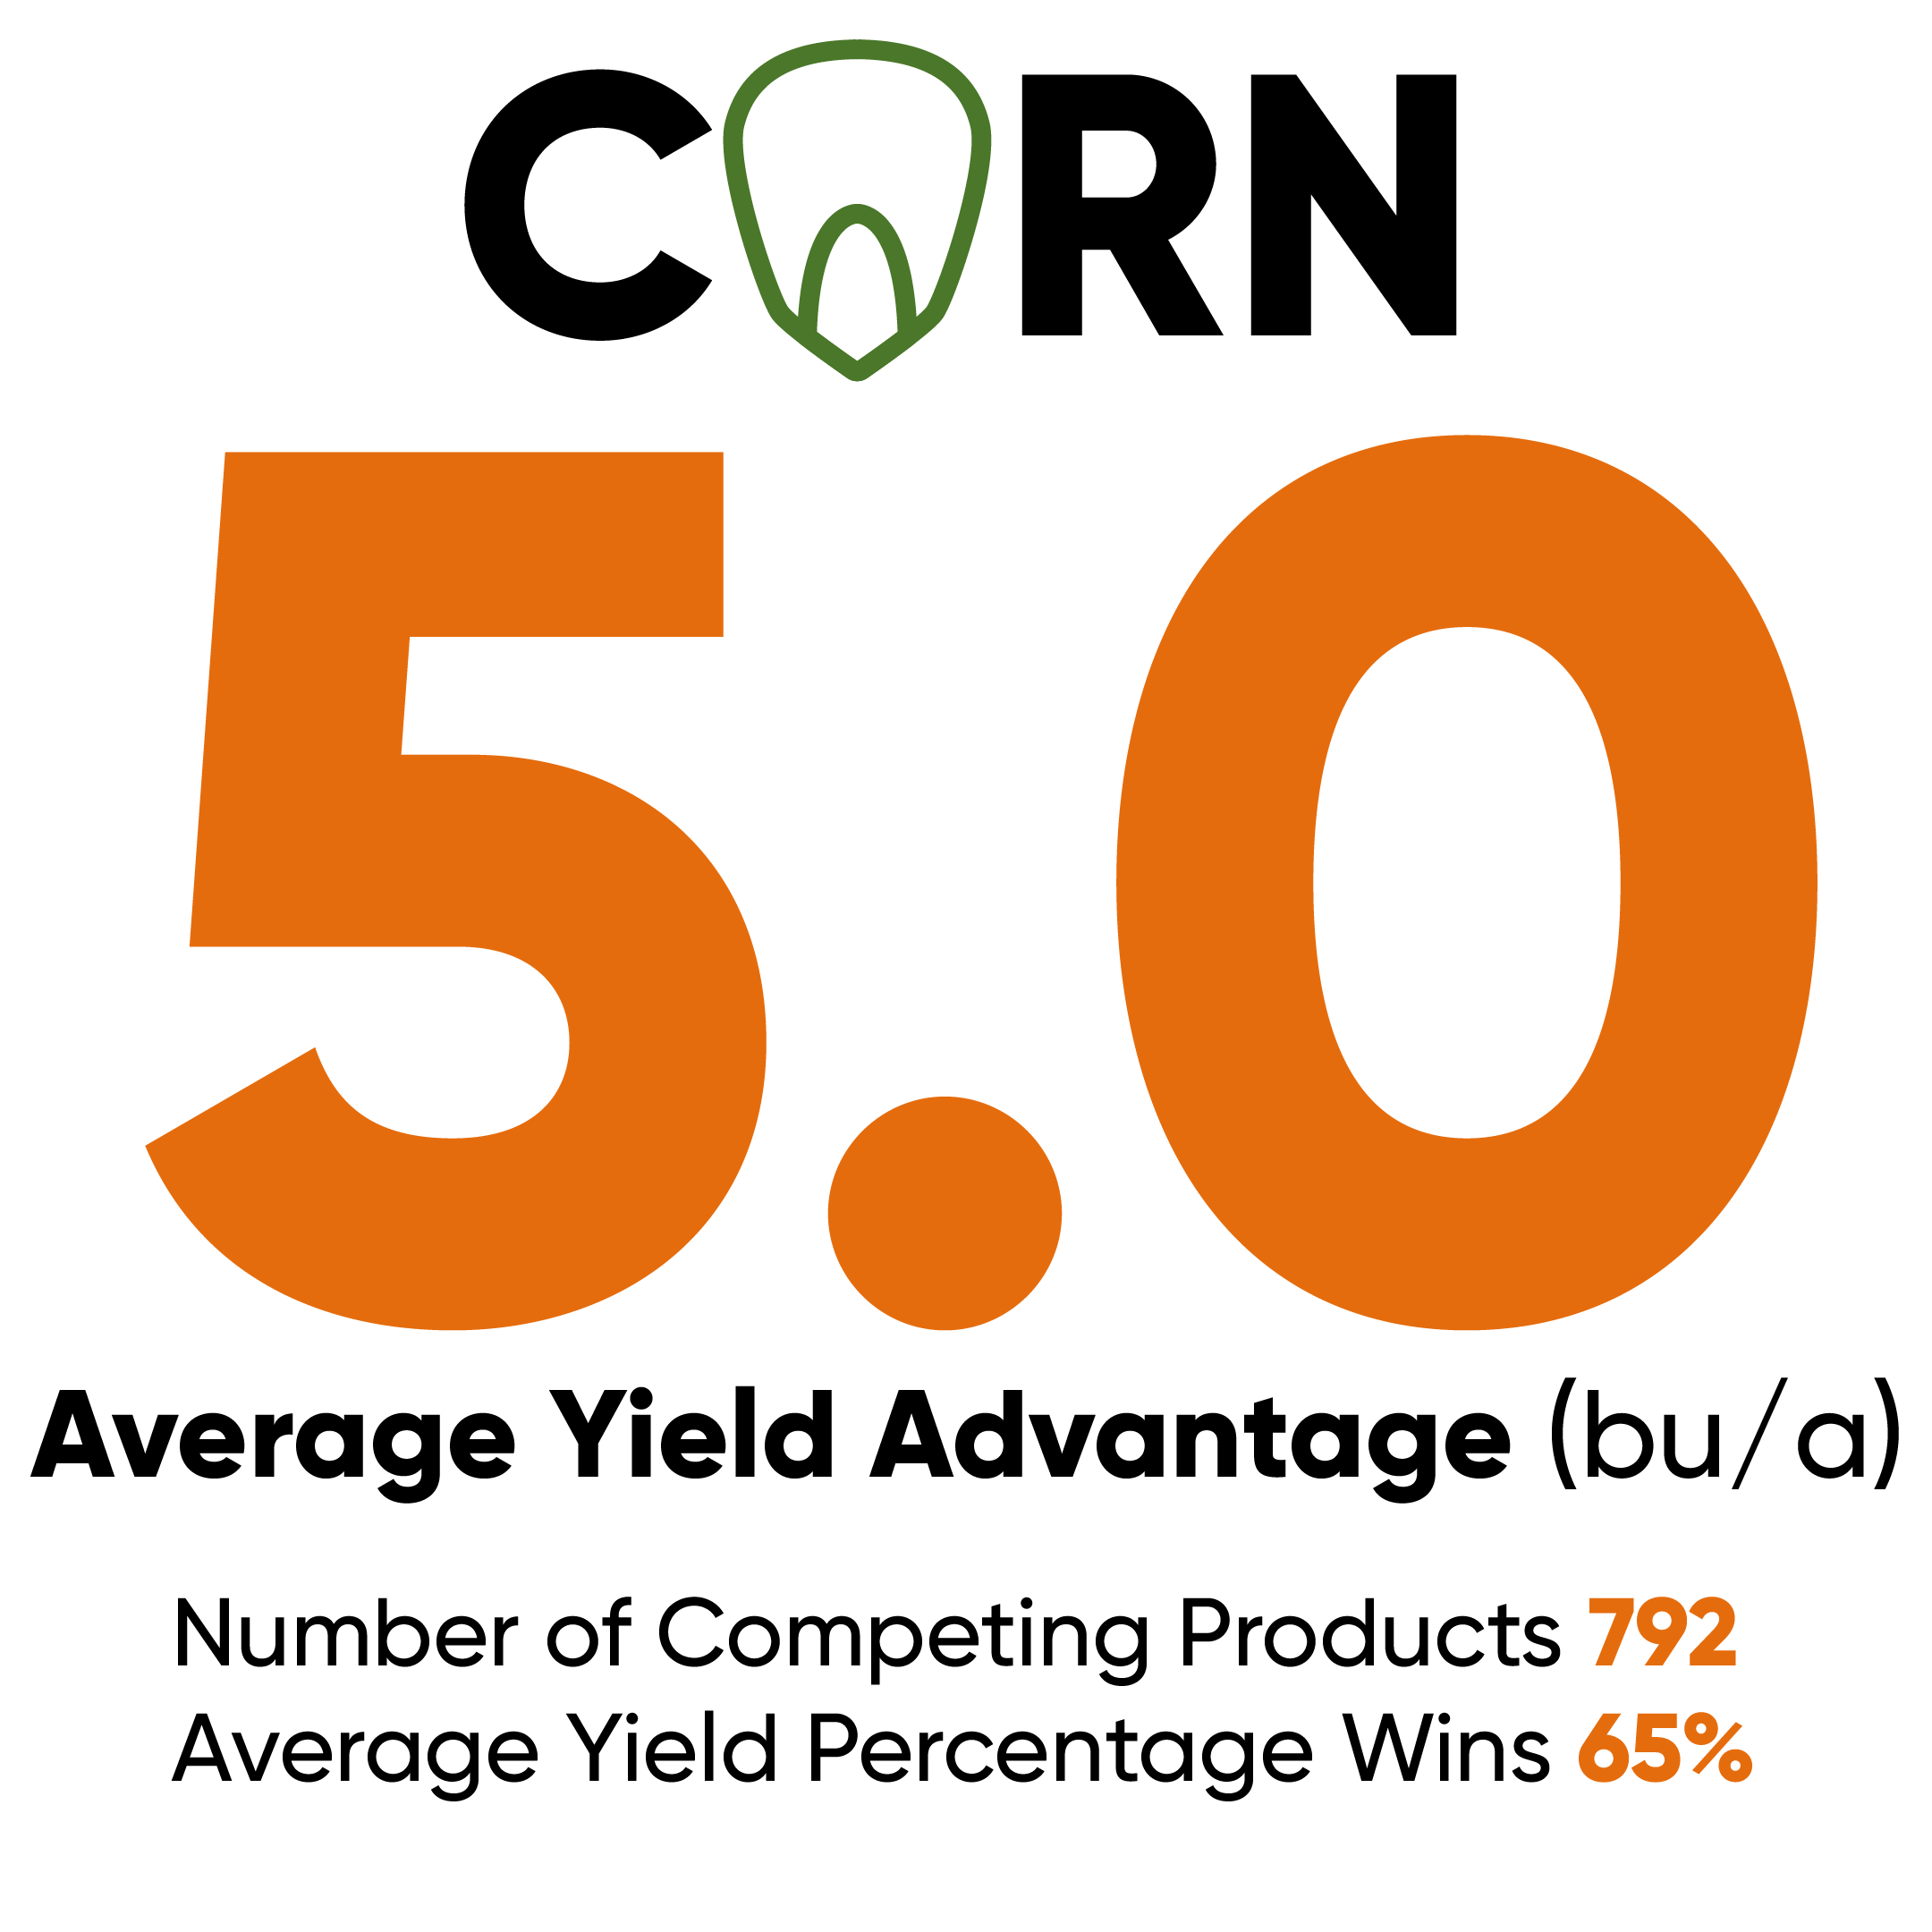 Pioneer Corn Yield Advantage Central Region